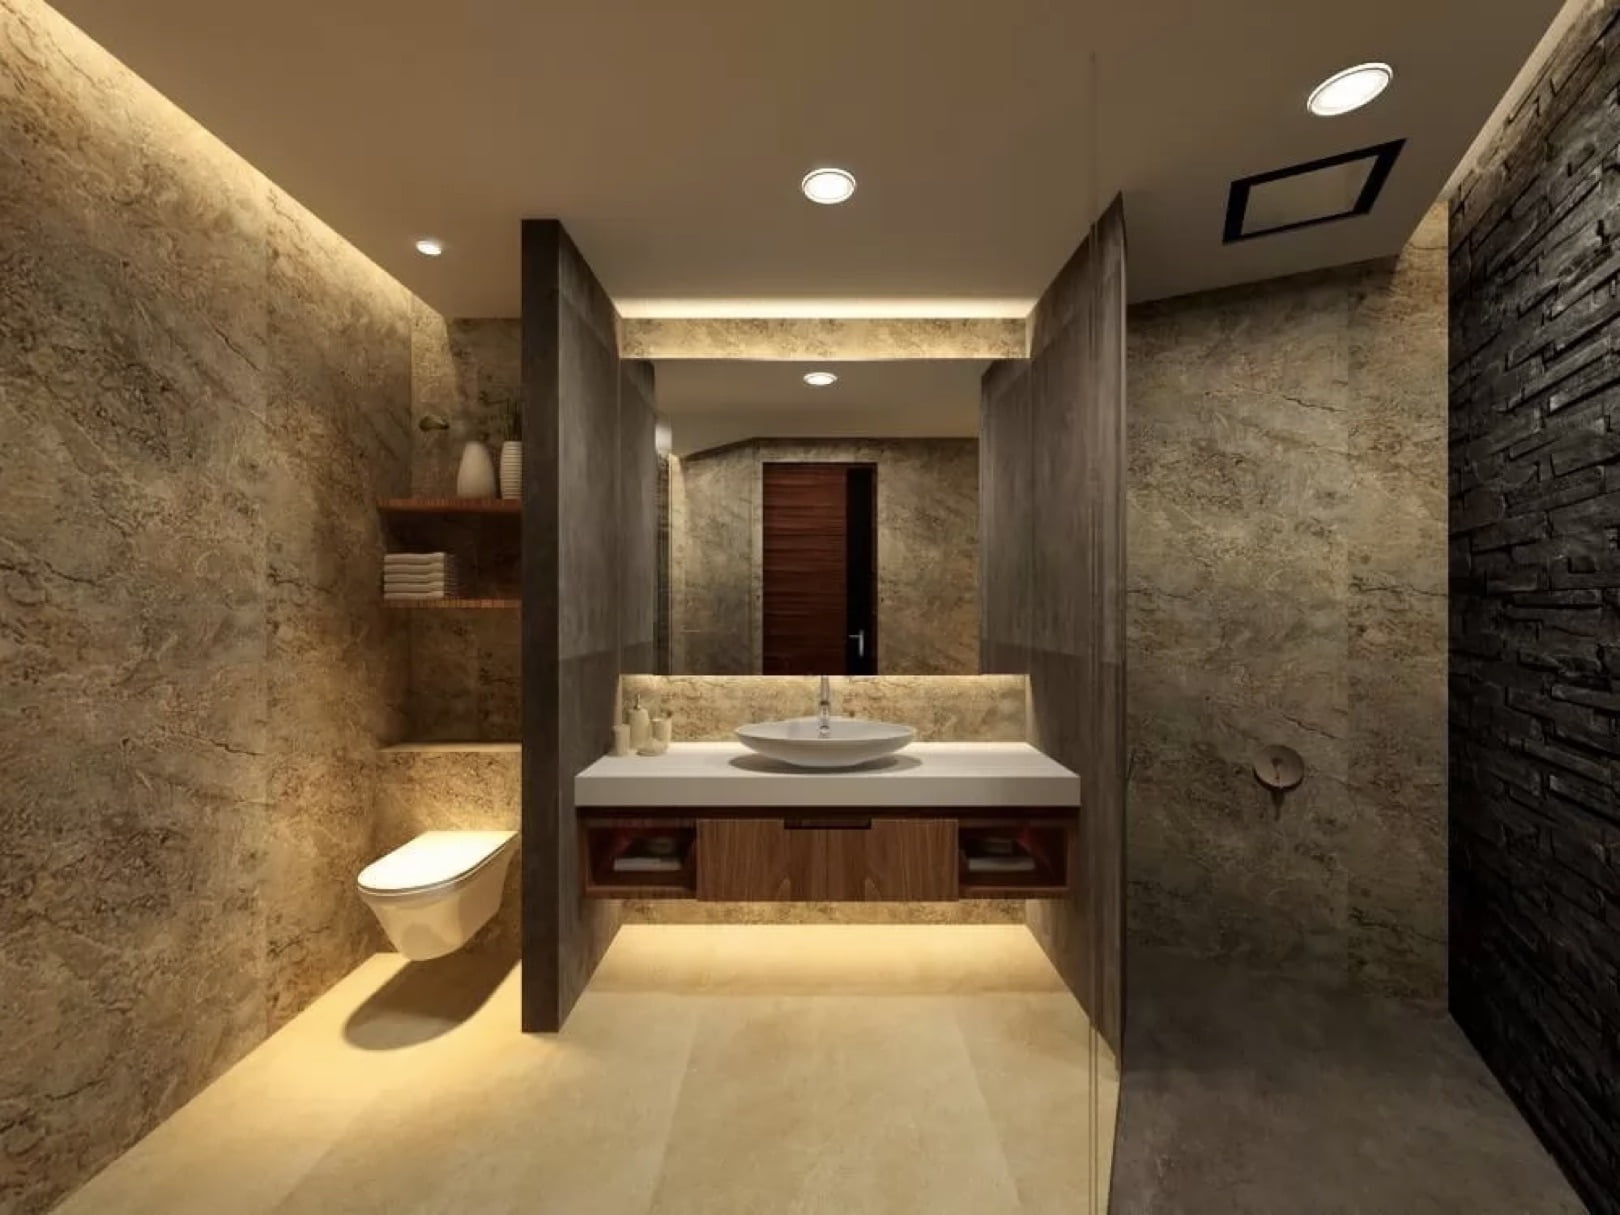 65 Kumpulan Desain Kamar Mandi Dengan Bathtub Sudut Paling Populer di Dunia